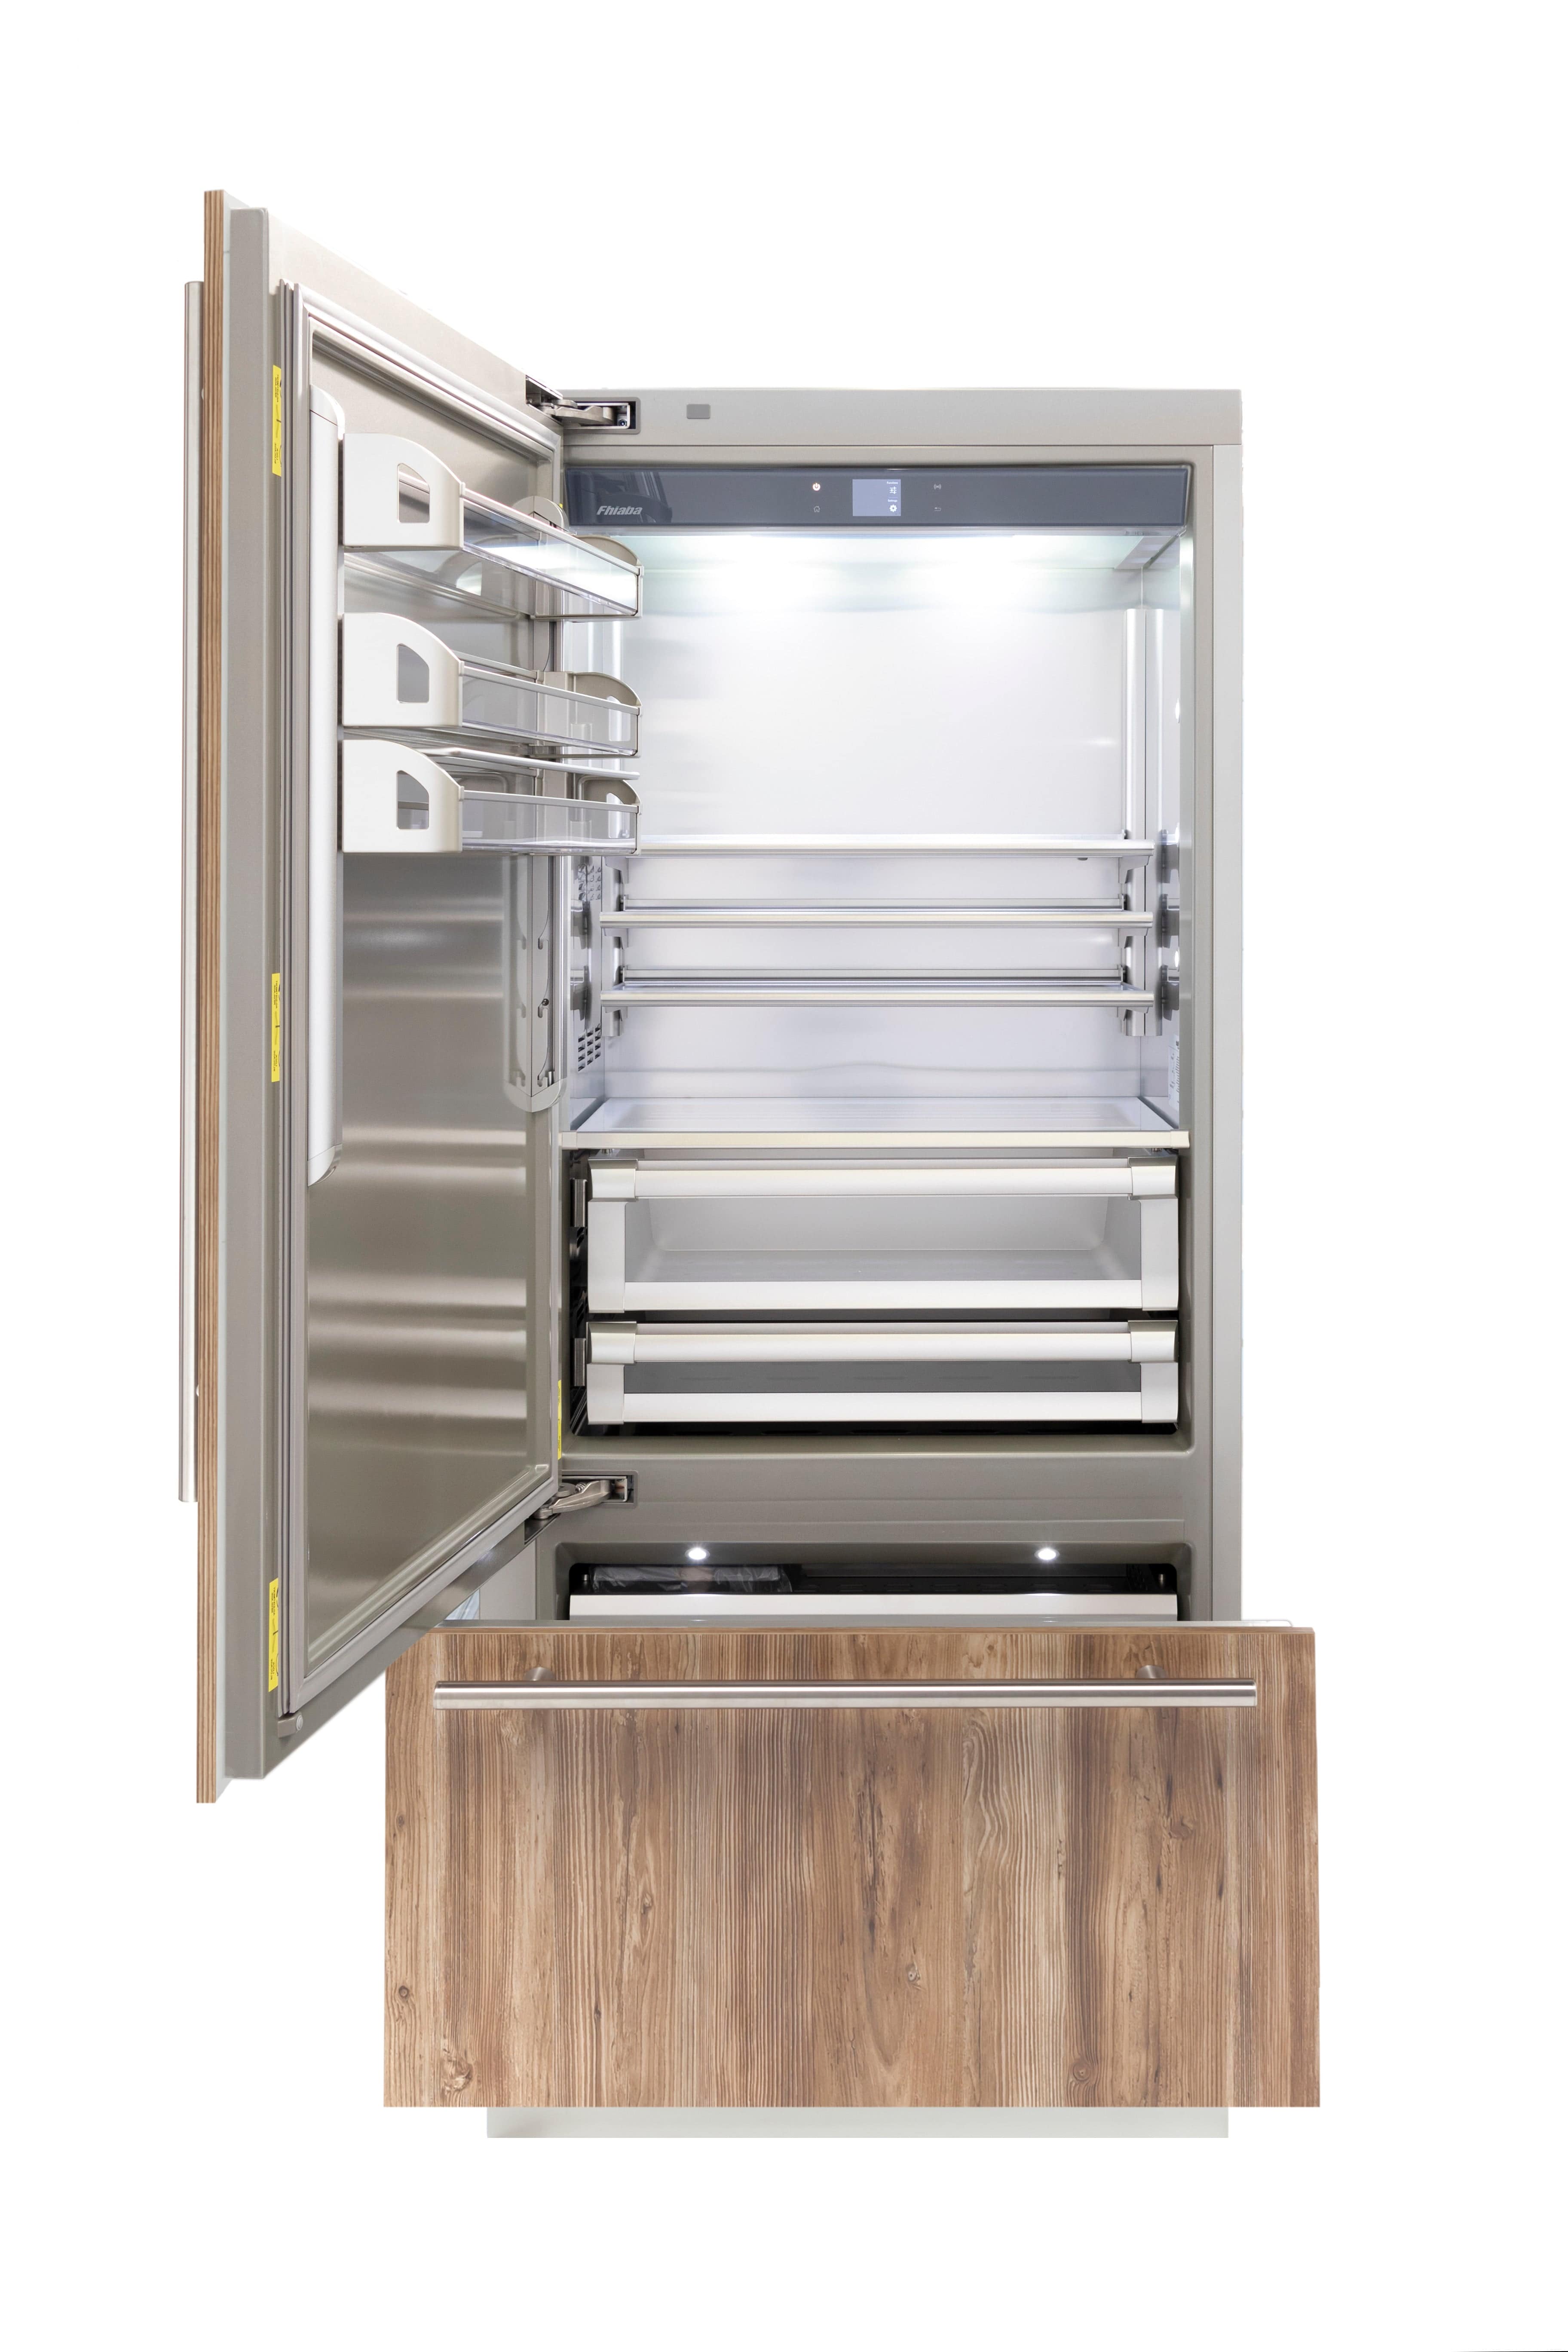 Fhiaba Intergrated 36" Panel Ready, Built-in Refrigerator FI36Bi Refrigerators FI36Bi-LOT Luxury Appliances Direct